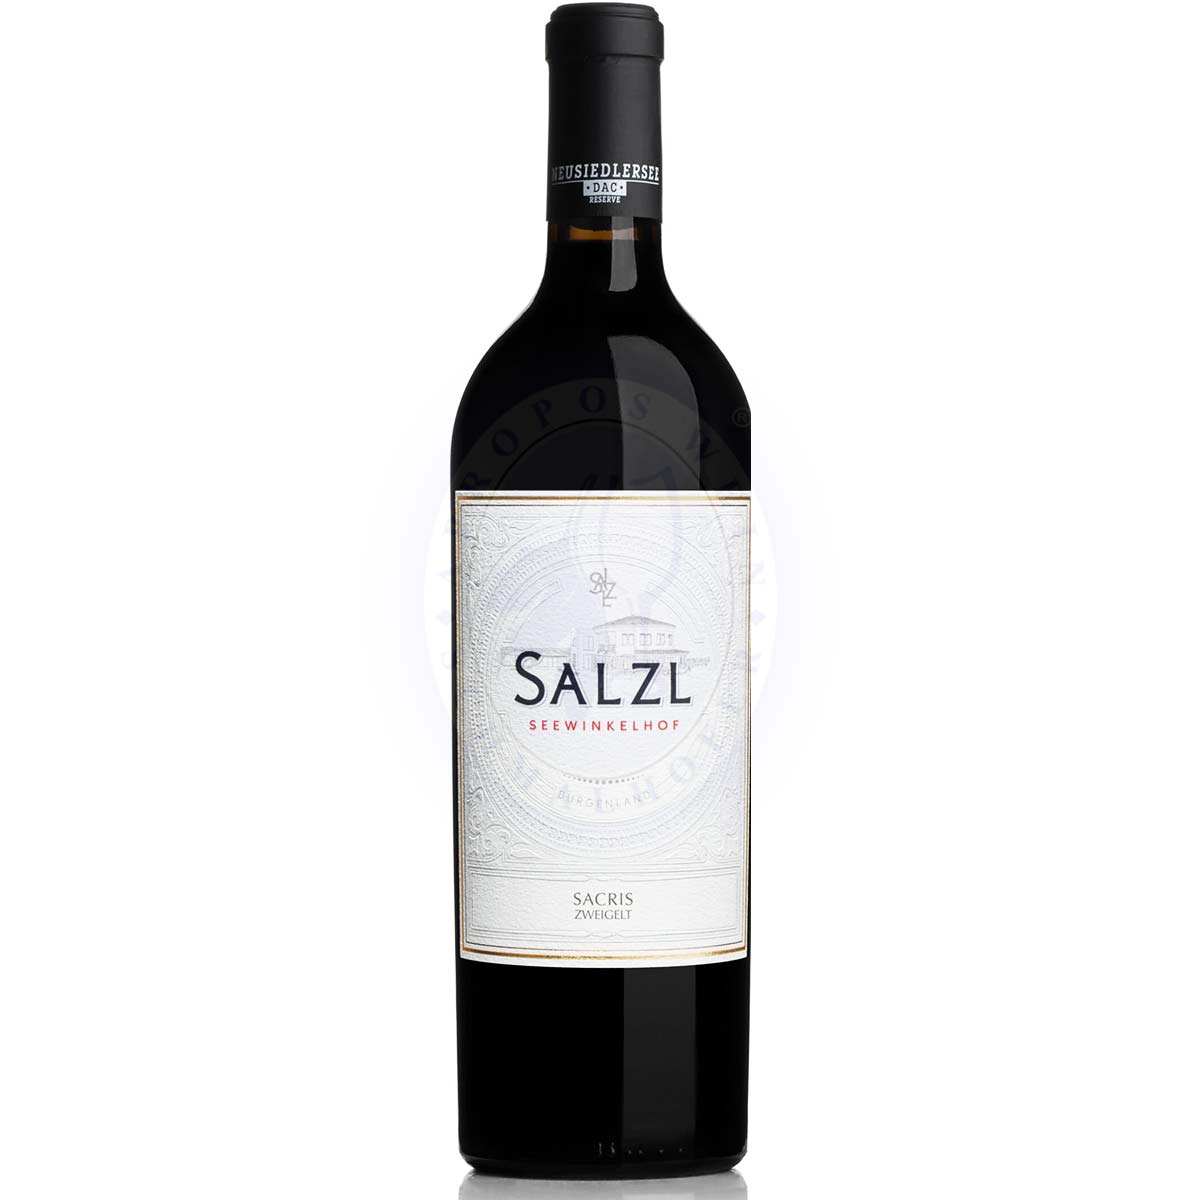 Zweigelt Sacris DAC Reserve 2019 Salzl 0,75l